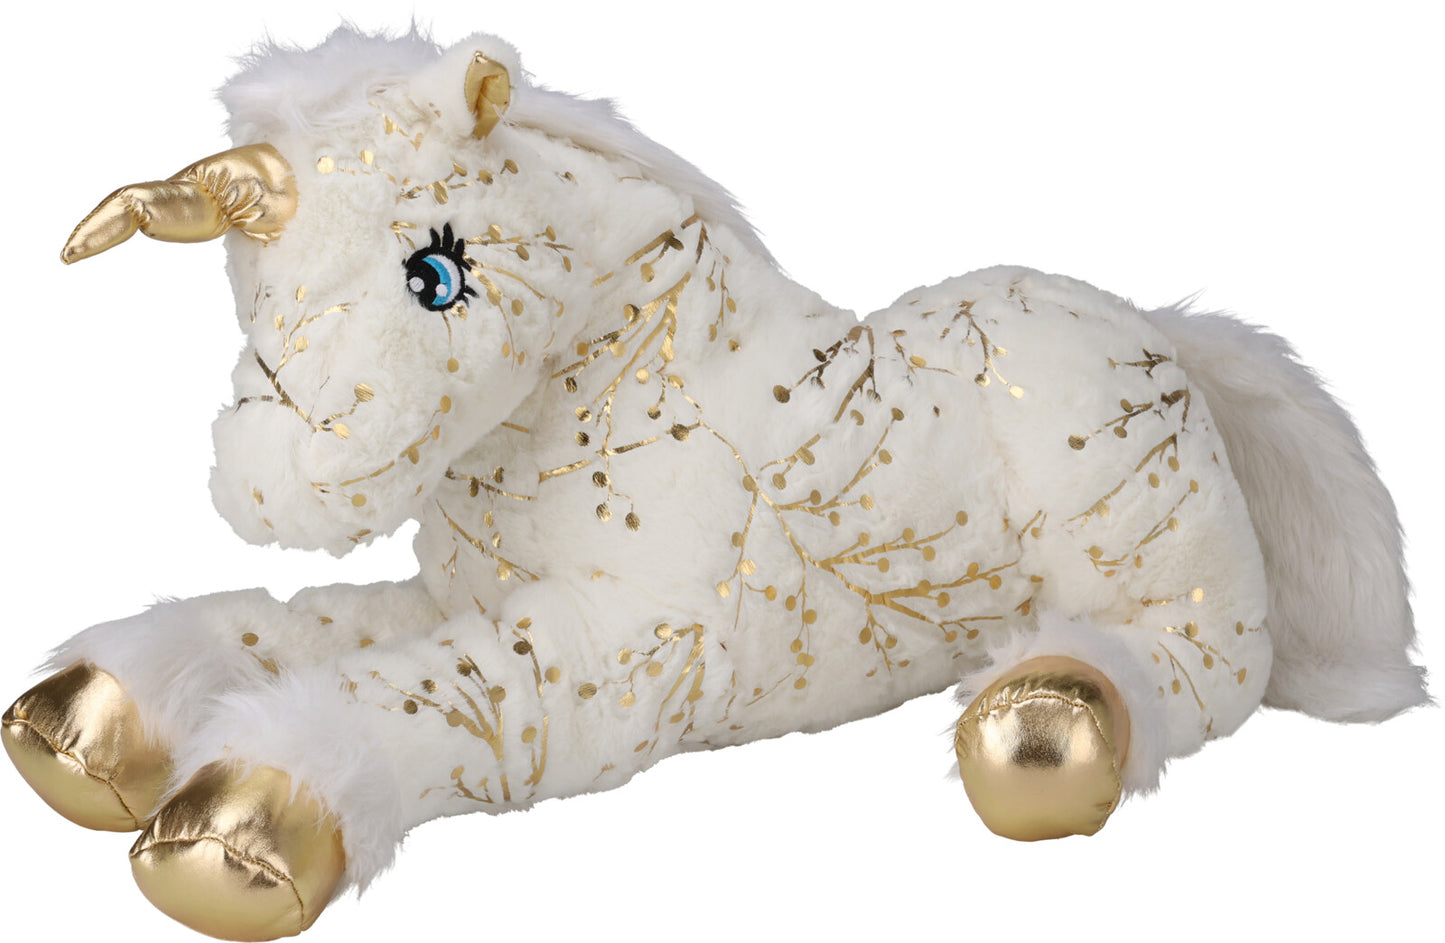 Large Unicorn Stuffed Animal with Metallic Gold